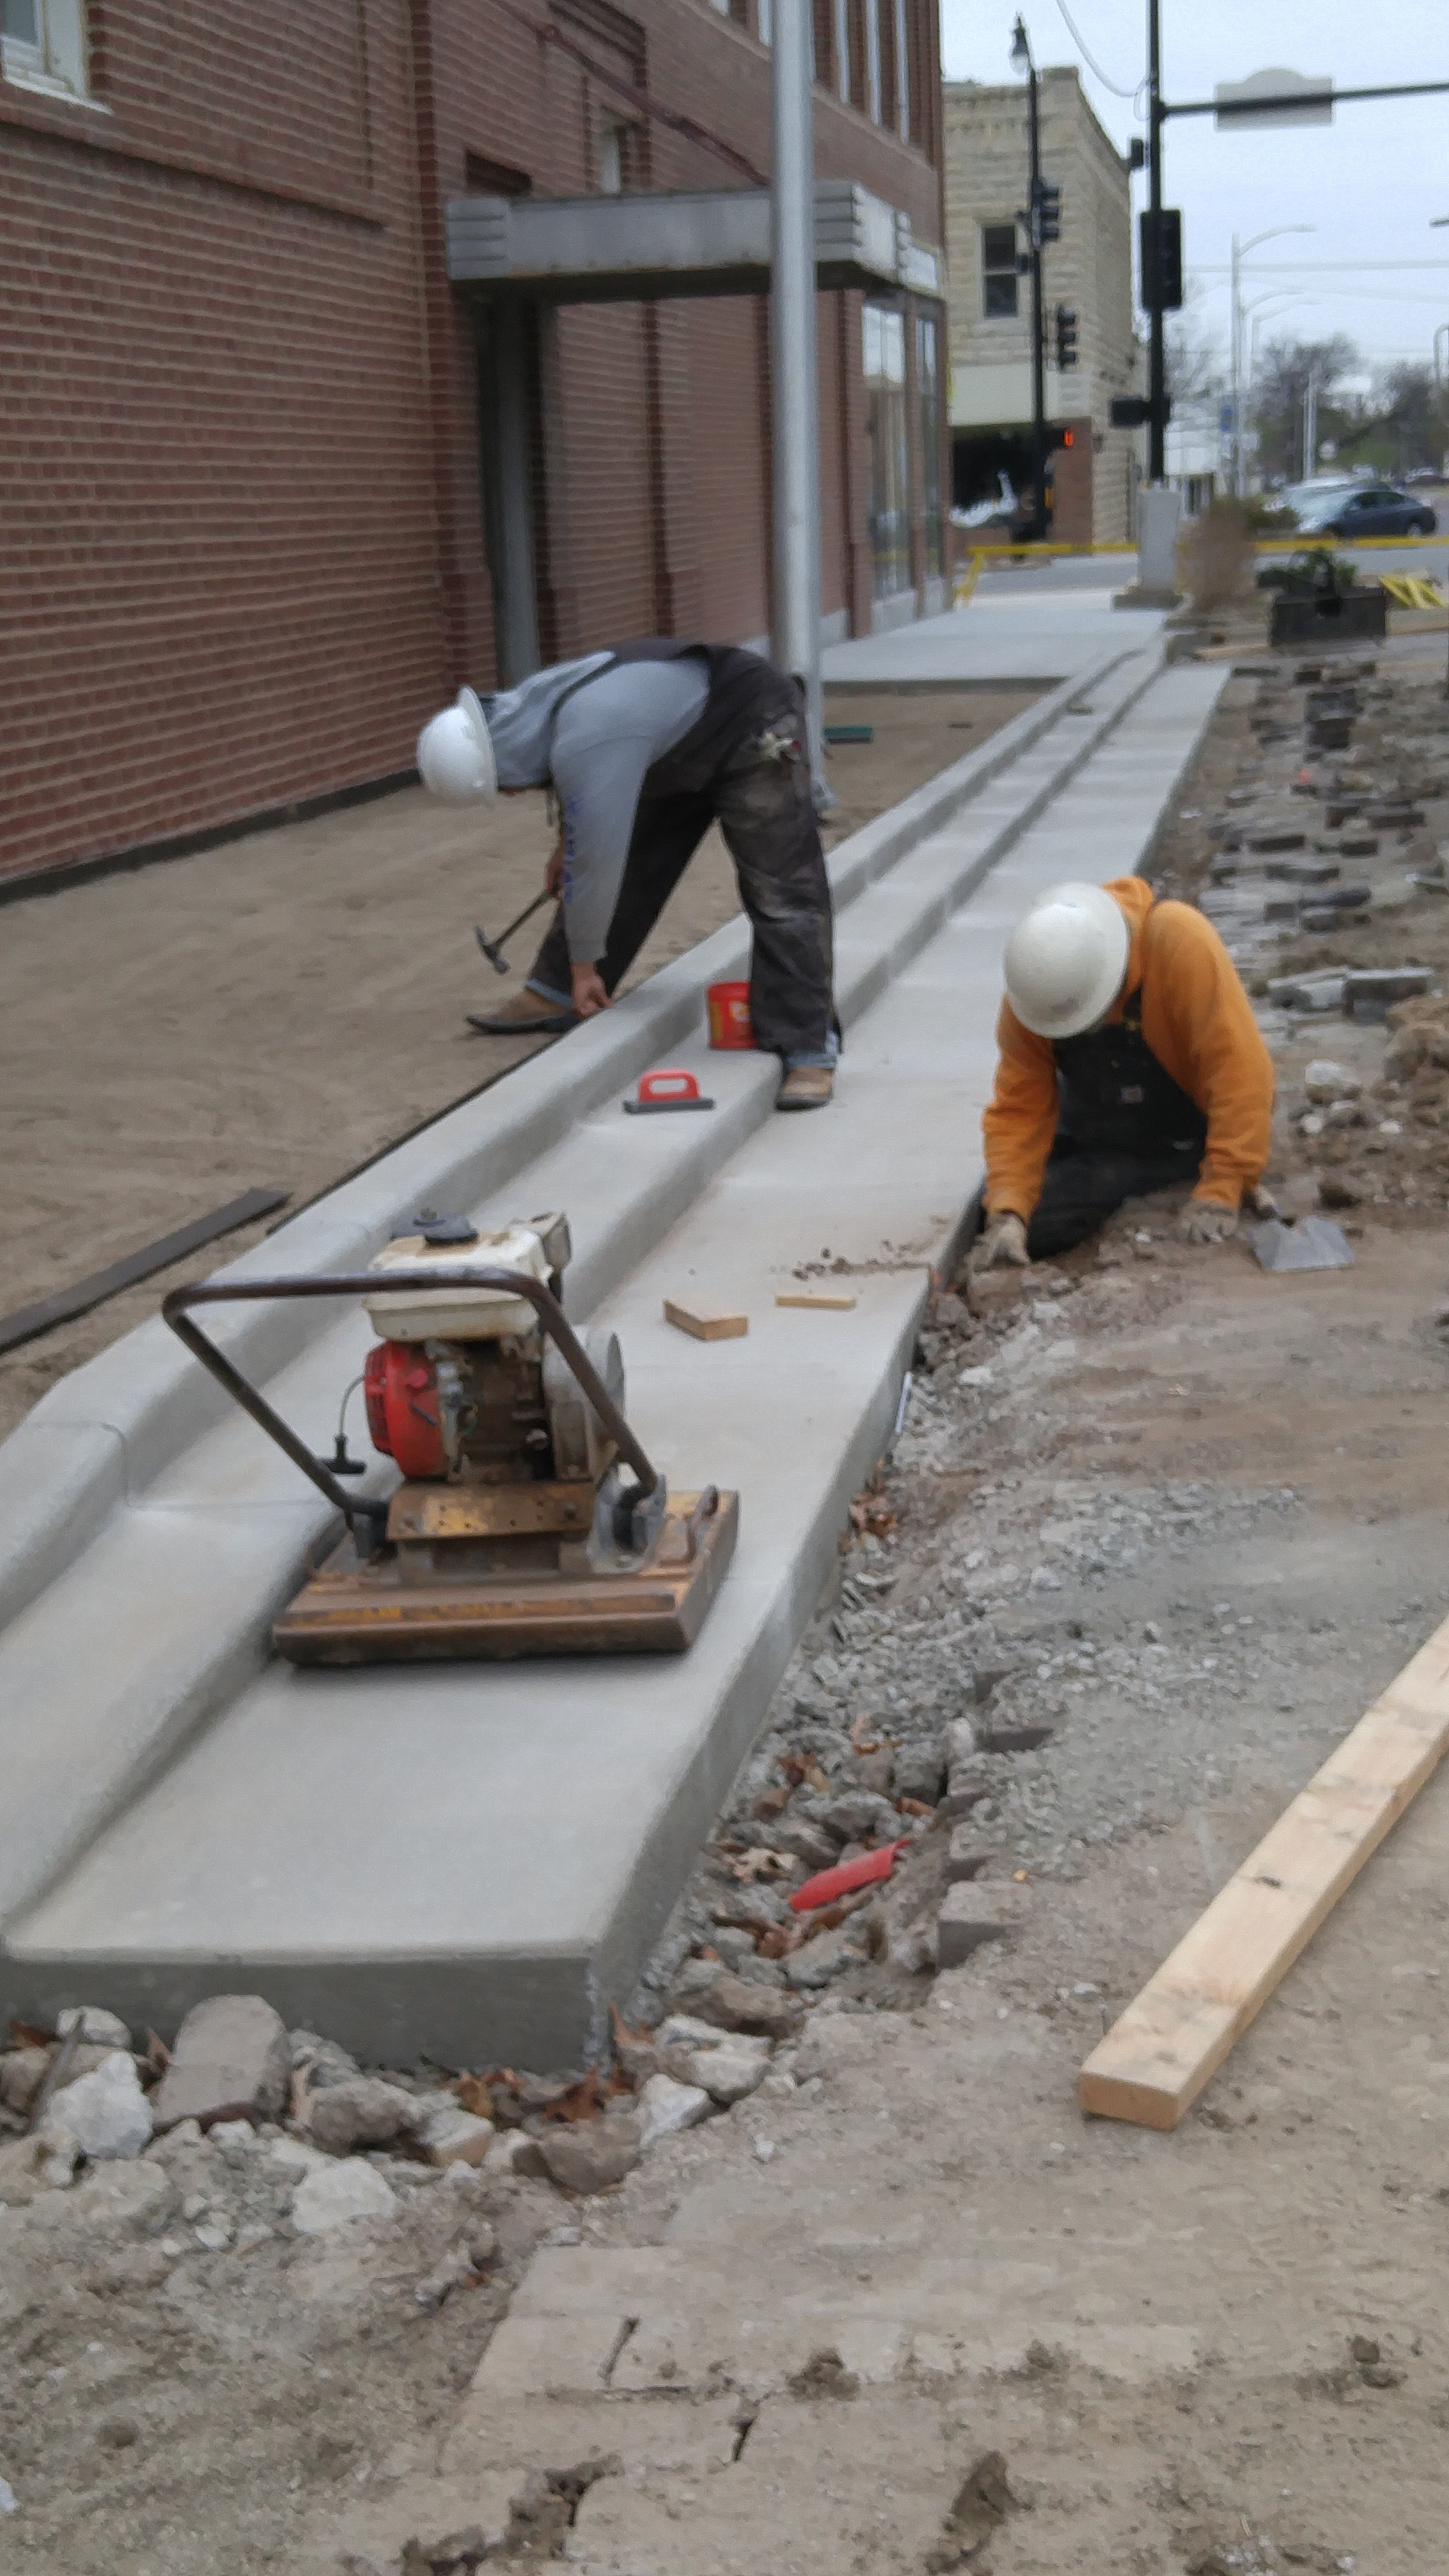 Sidewalk construction continues